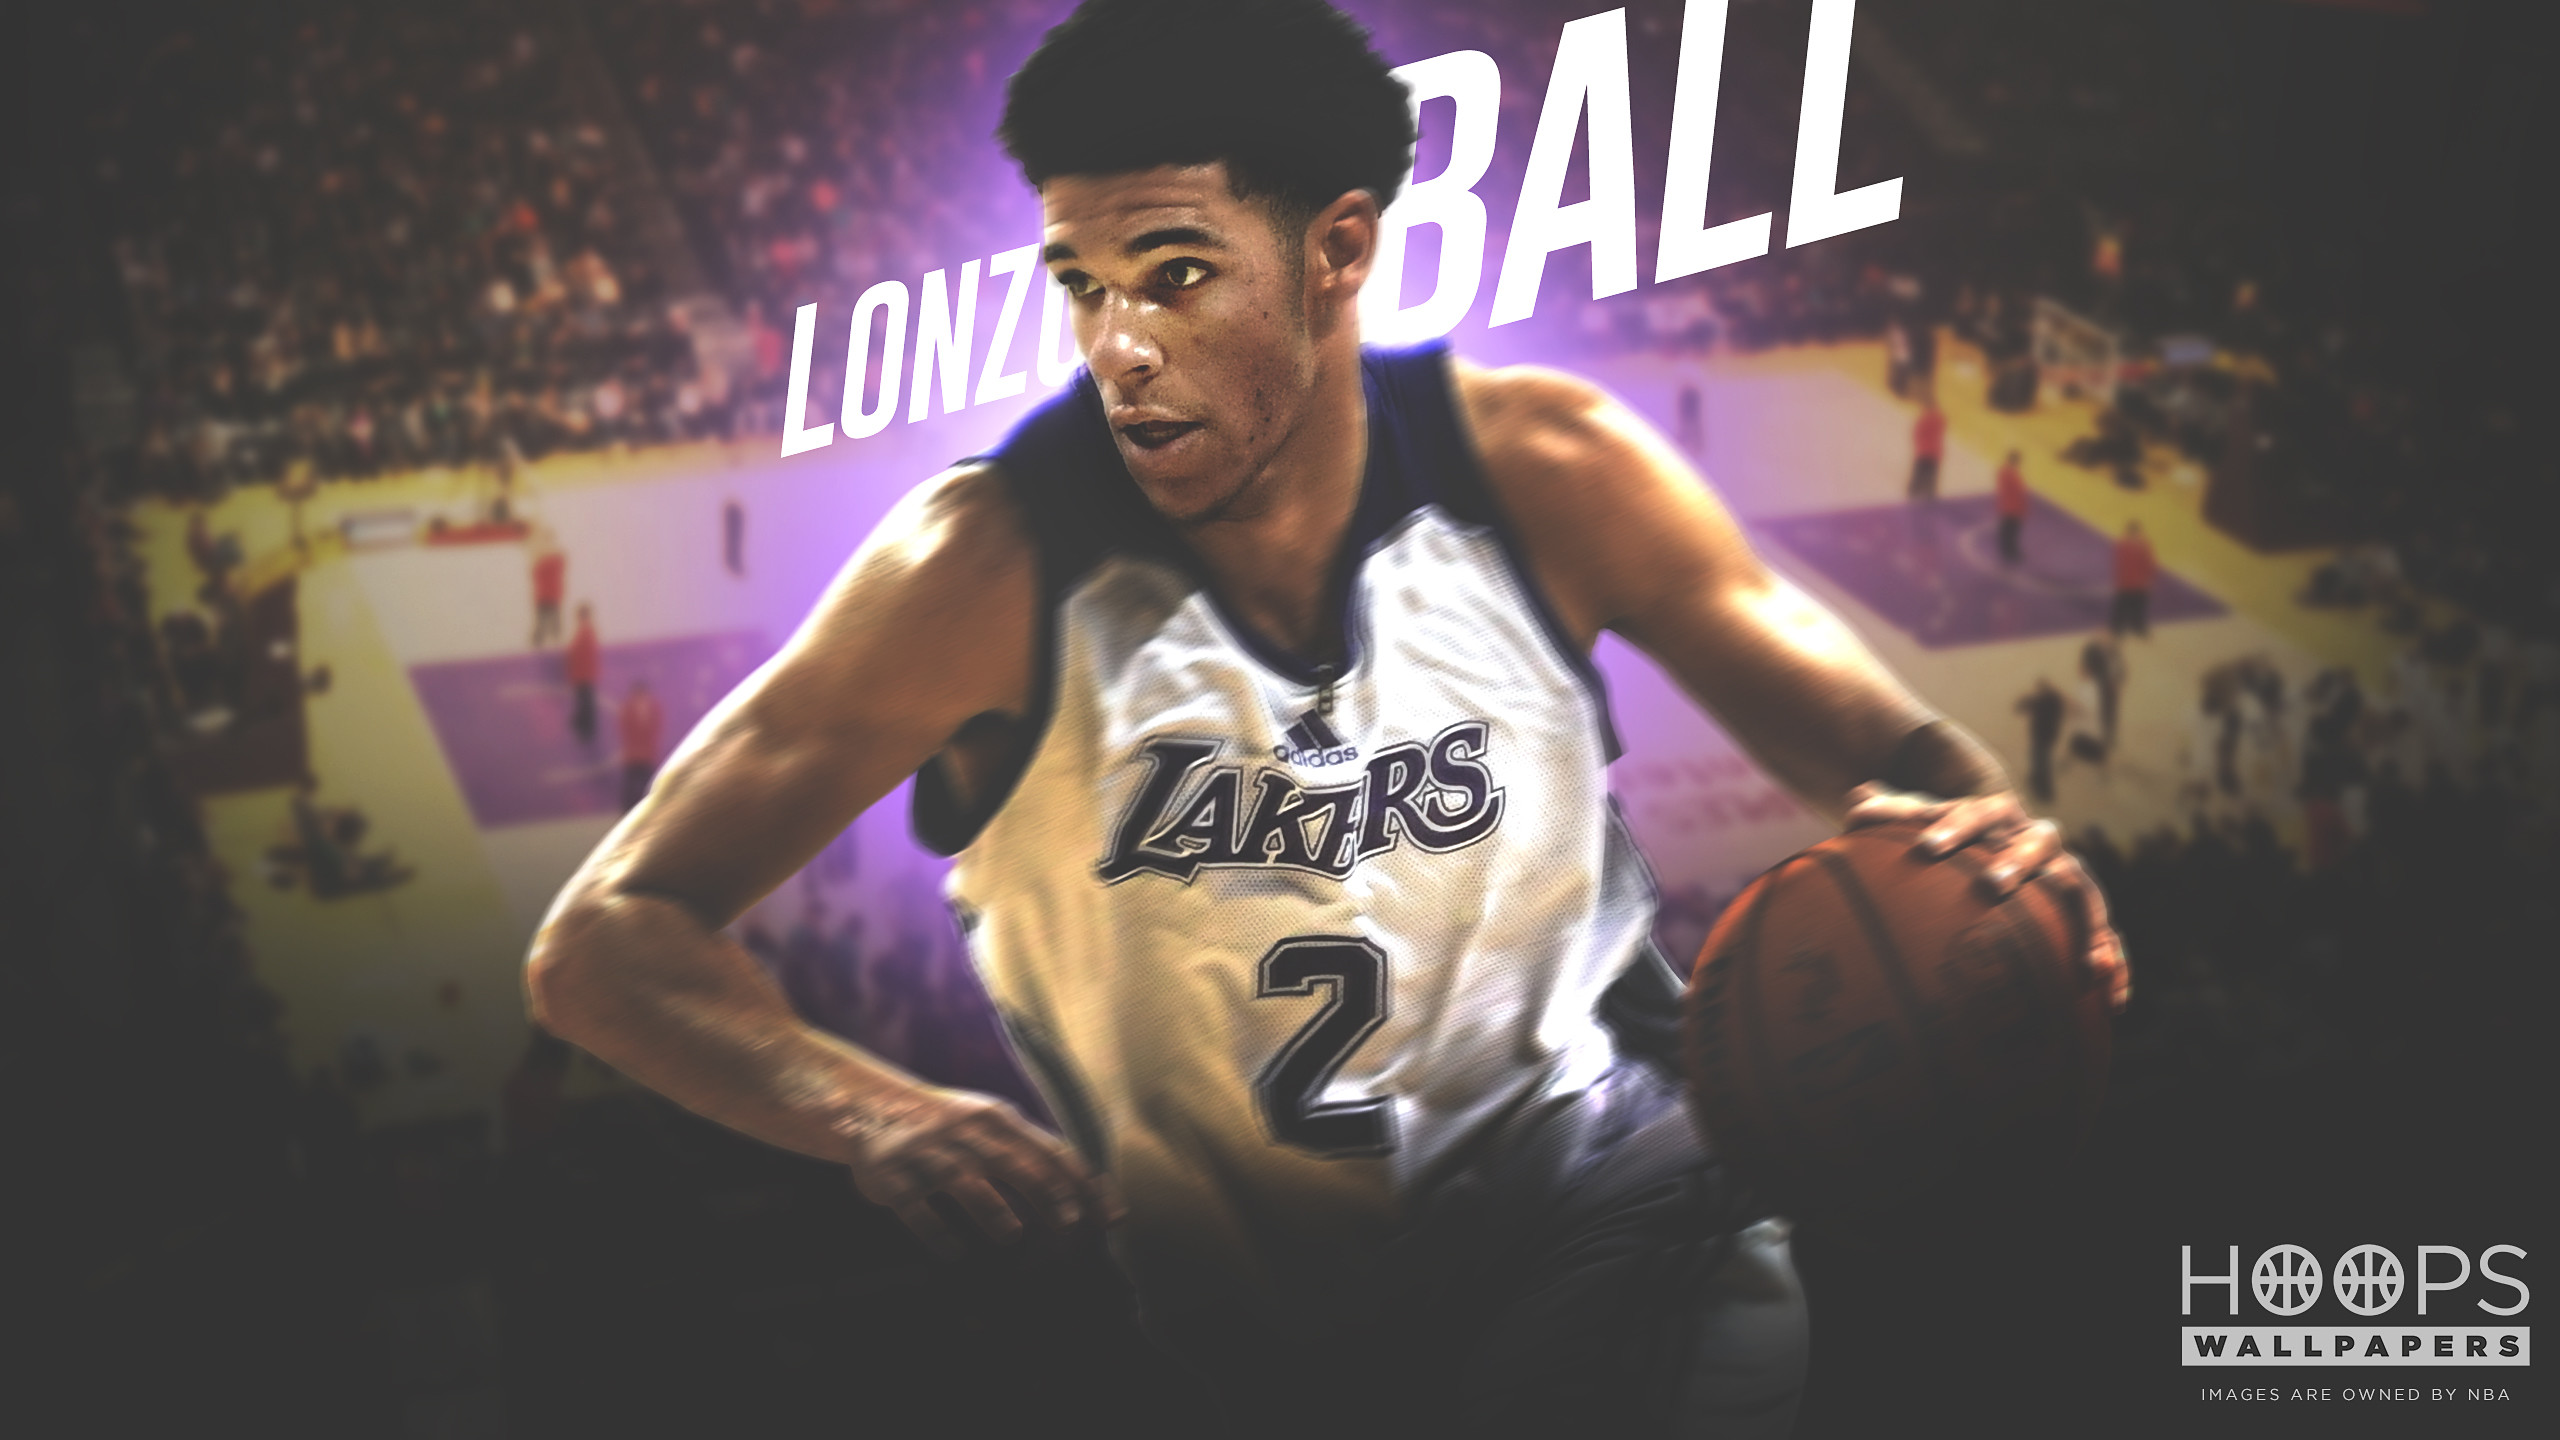 Lonzo Ball Wallpaper Image